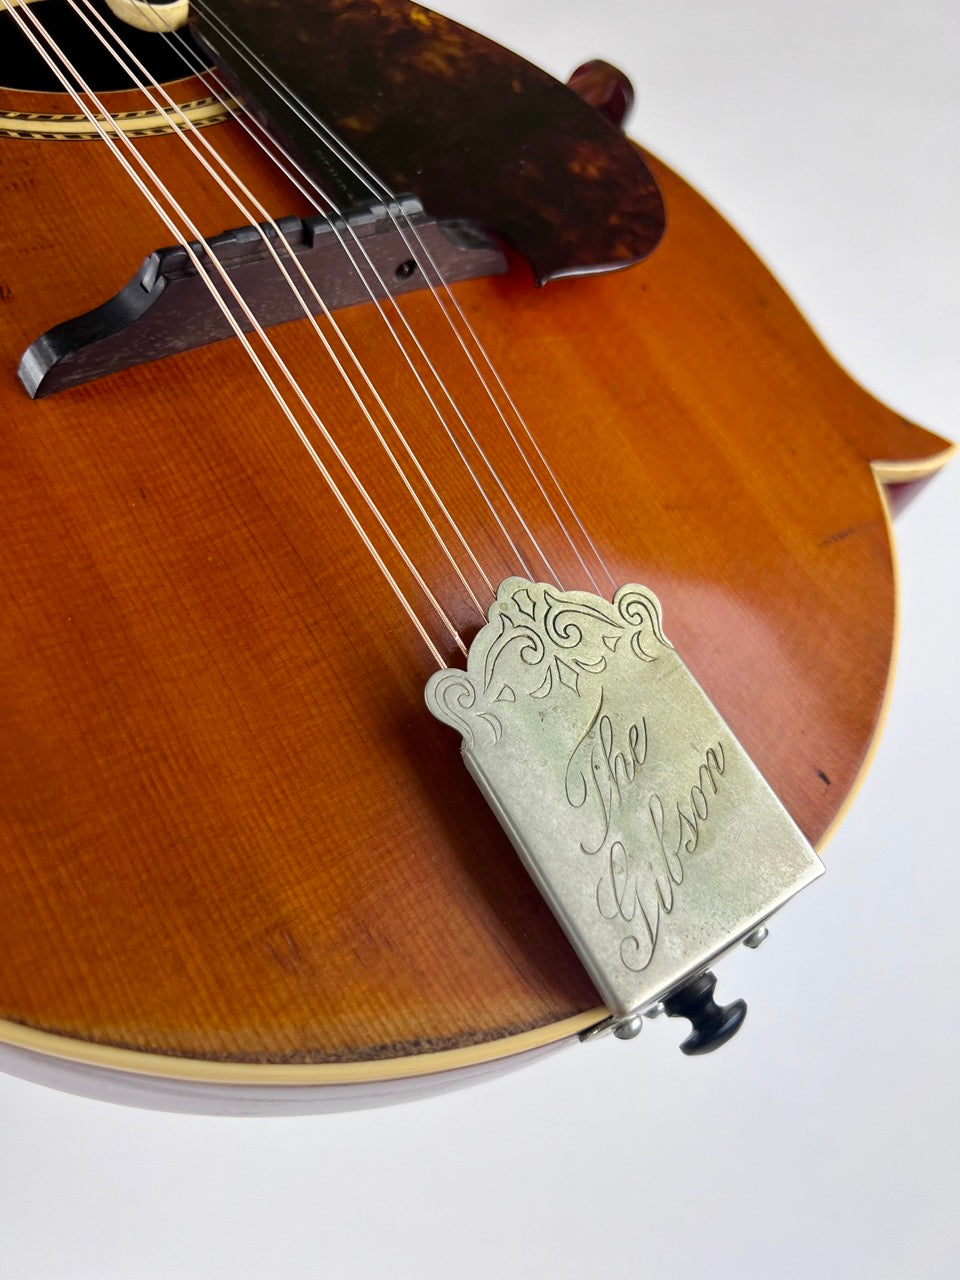 1914 Gibson F-4 Mandolin